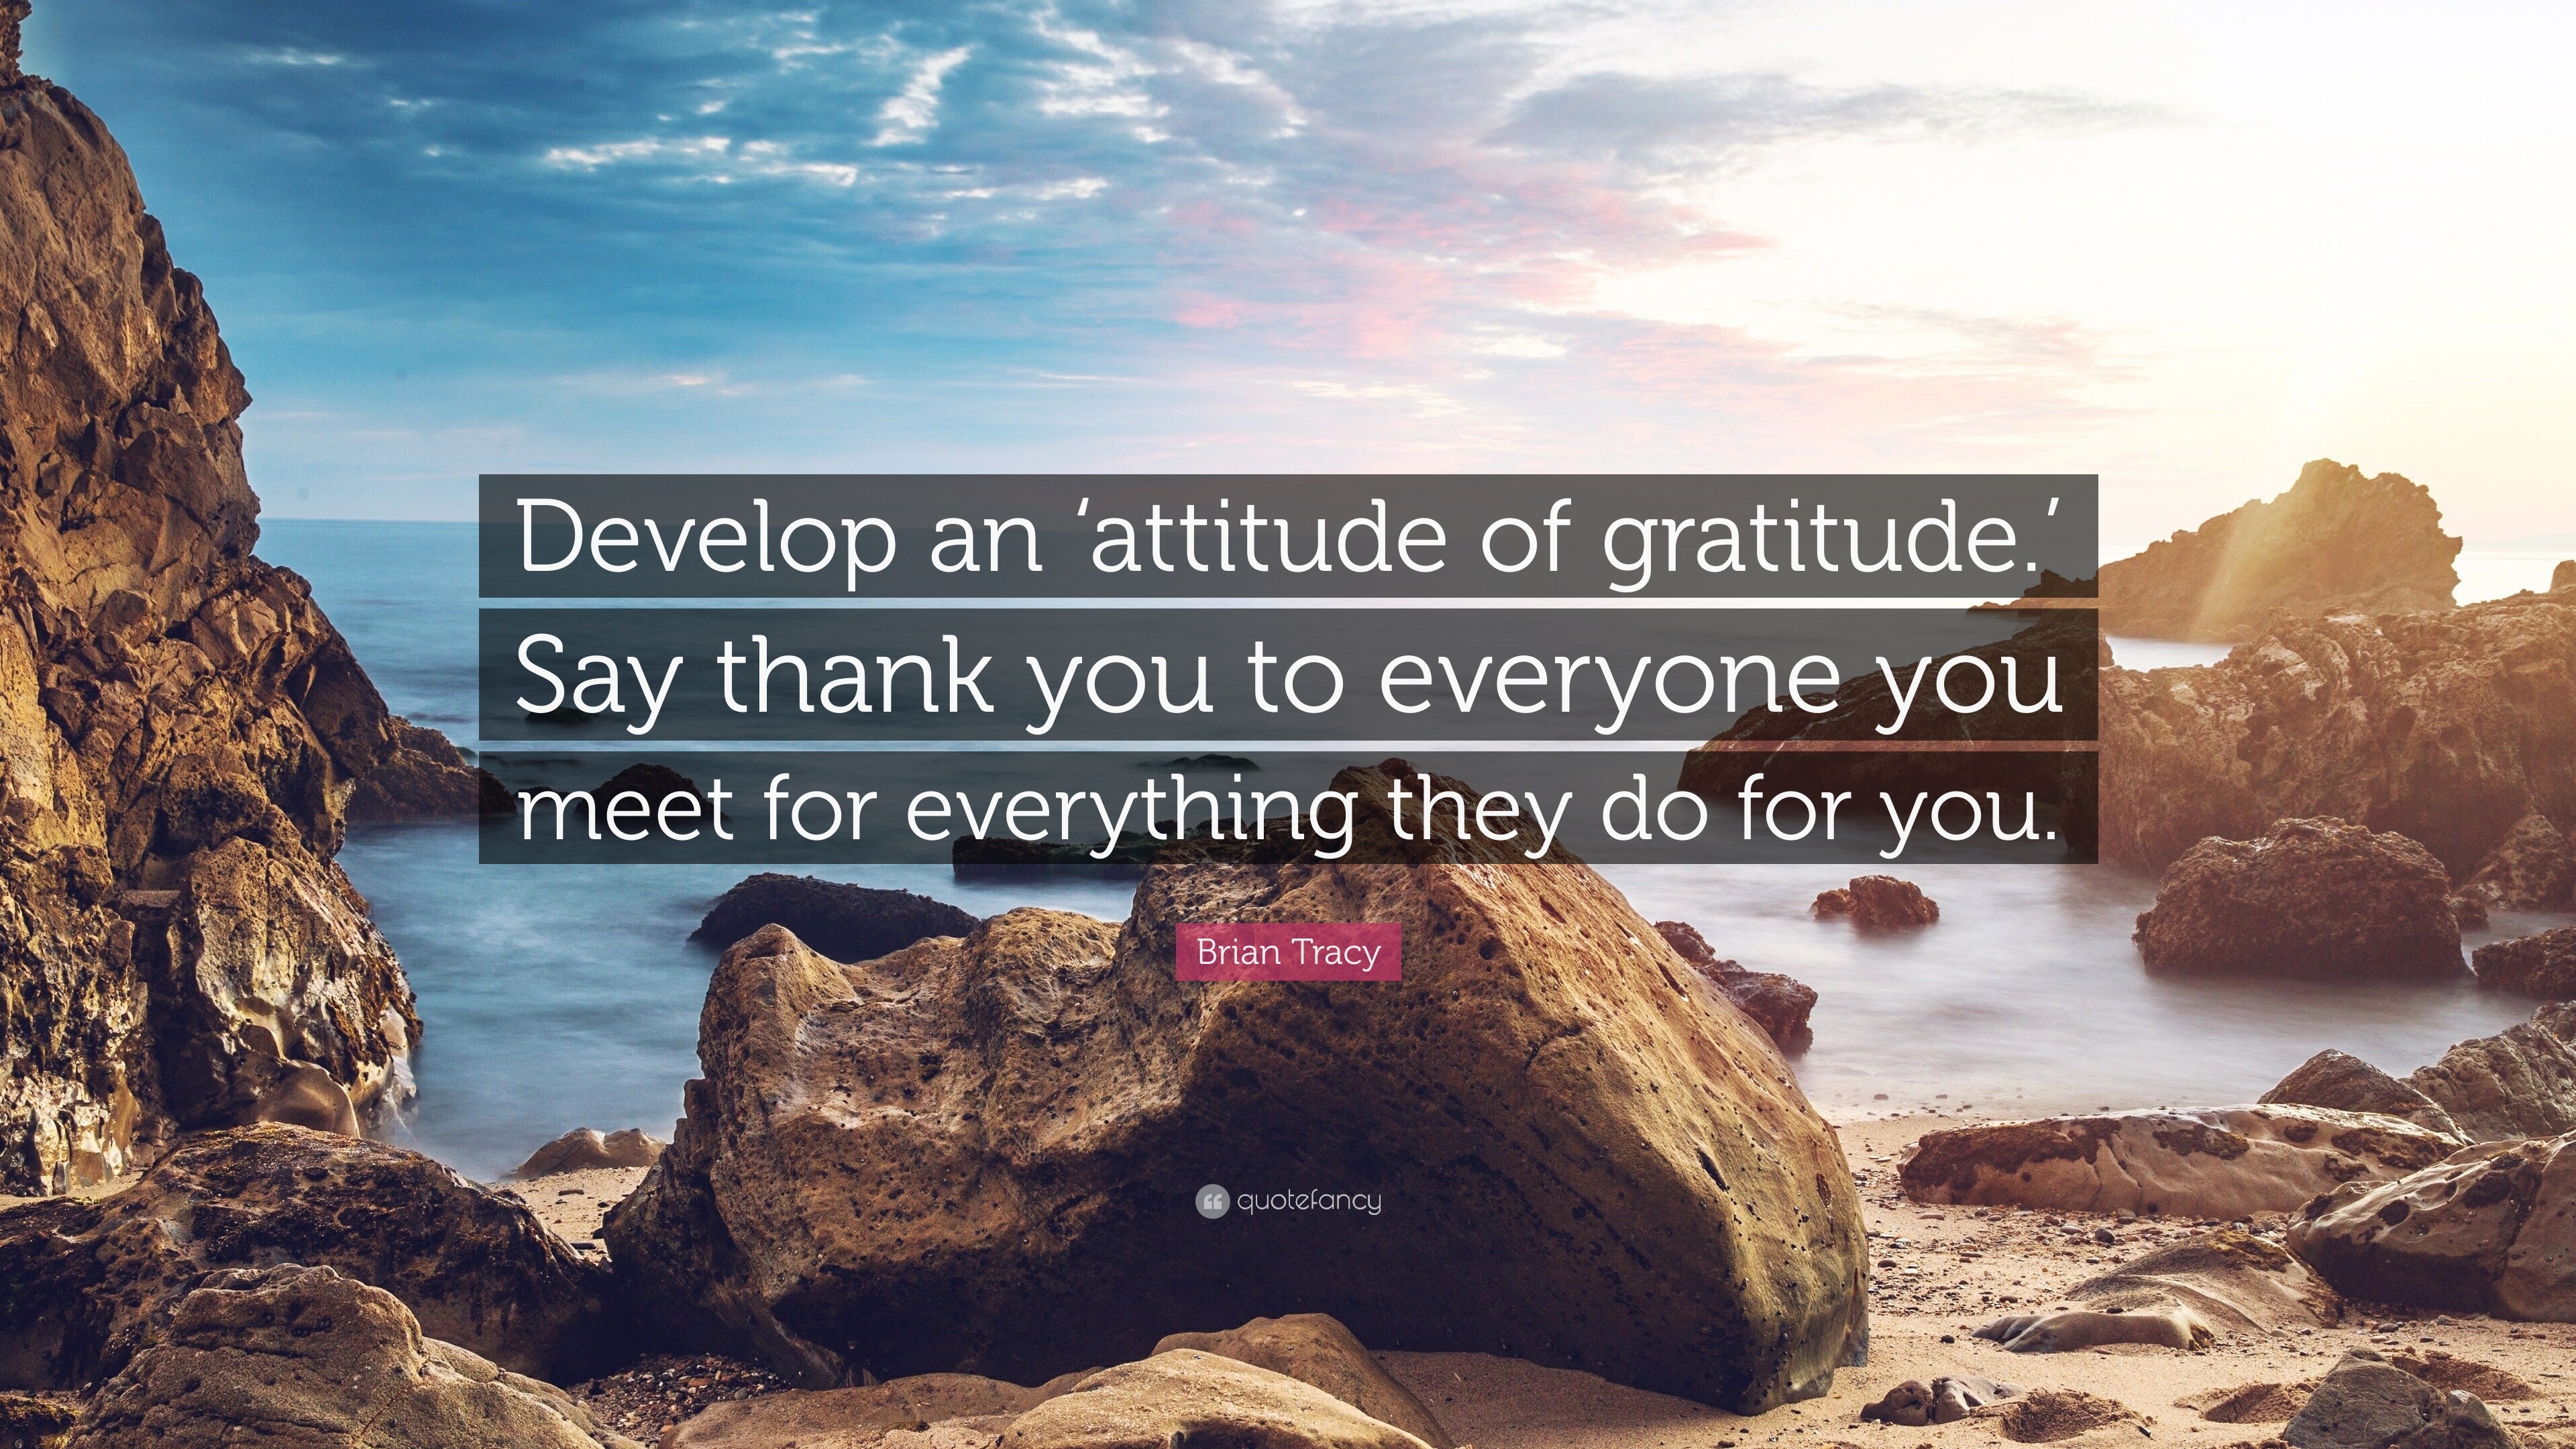 Make gratitude your attitude 💕 I woke up with so many reasons to